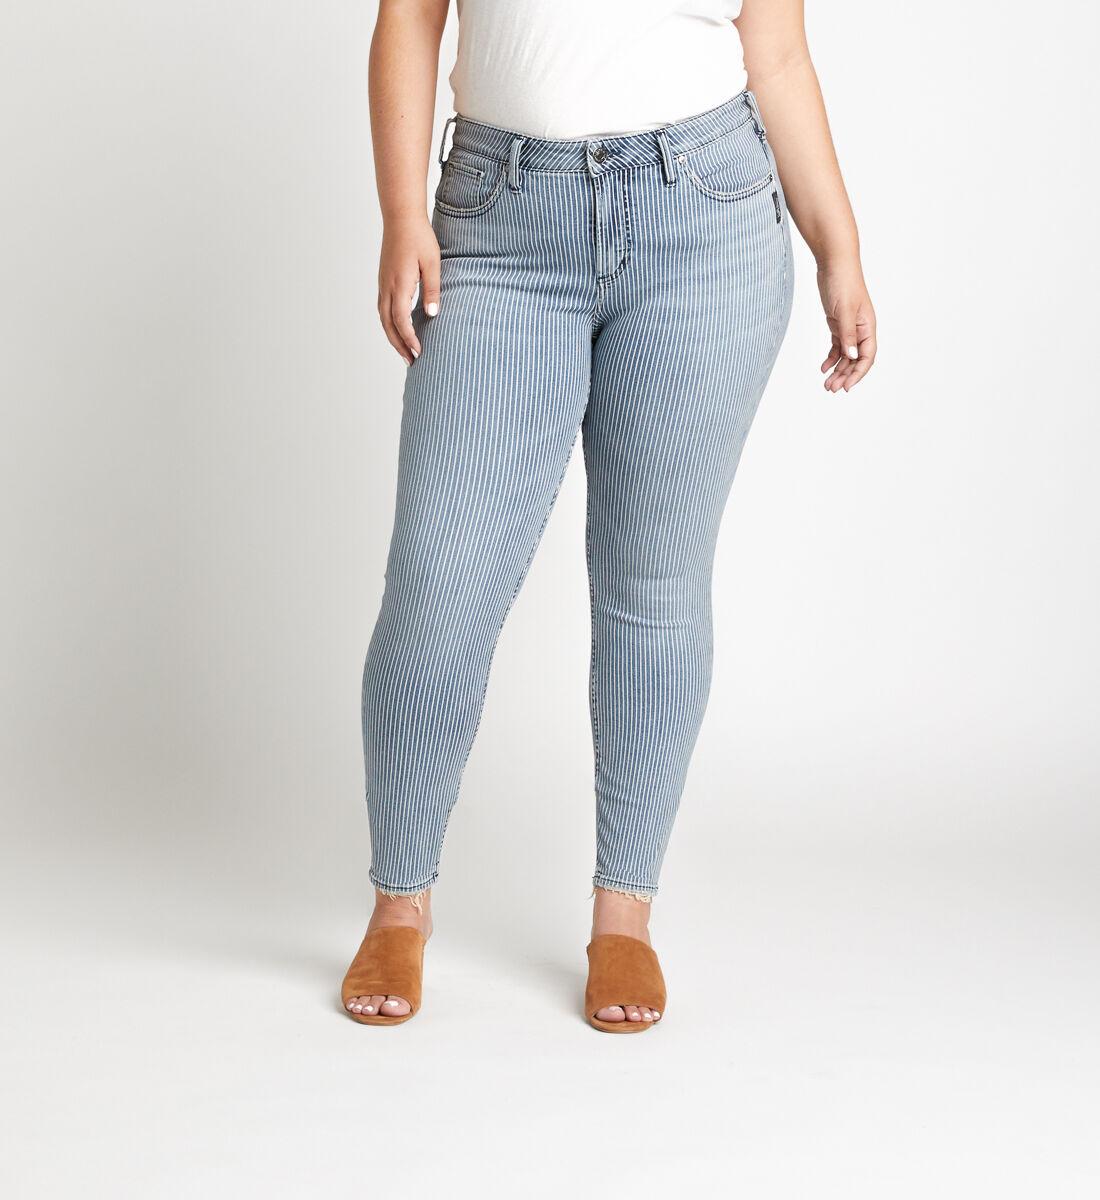 silver jeans canada sale